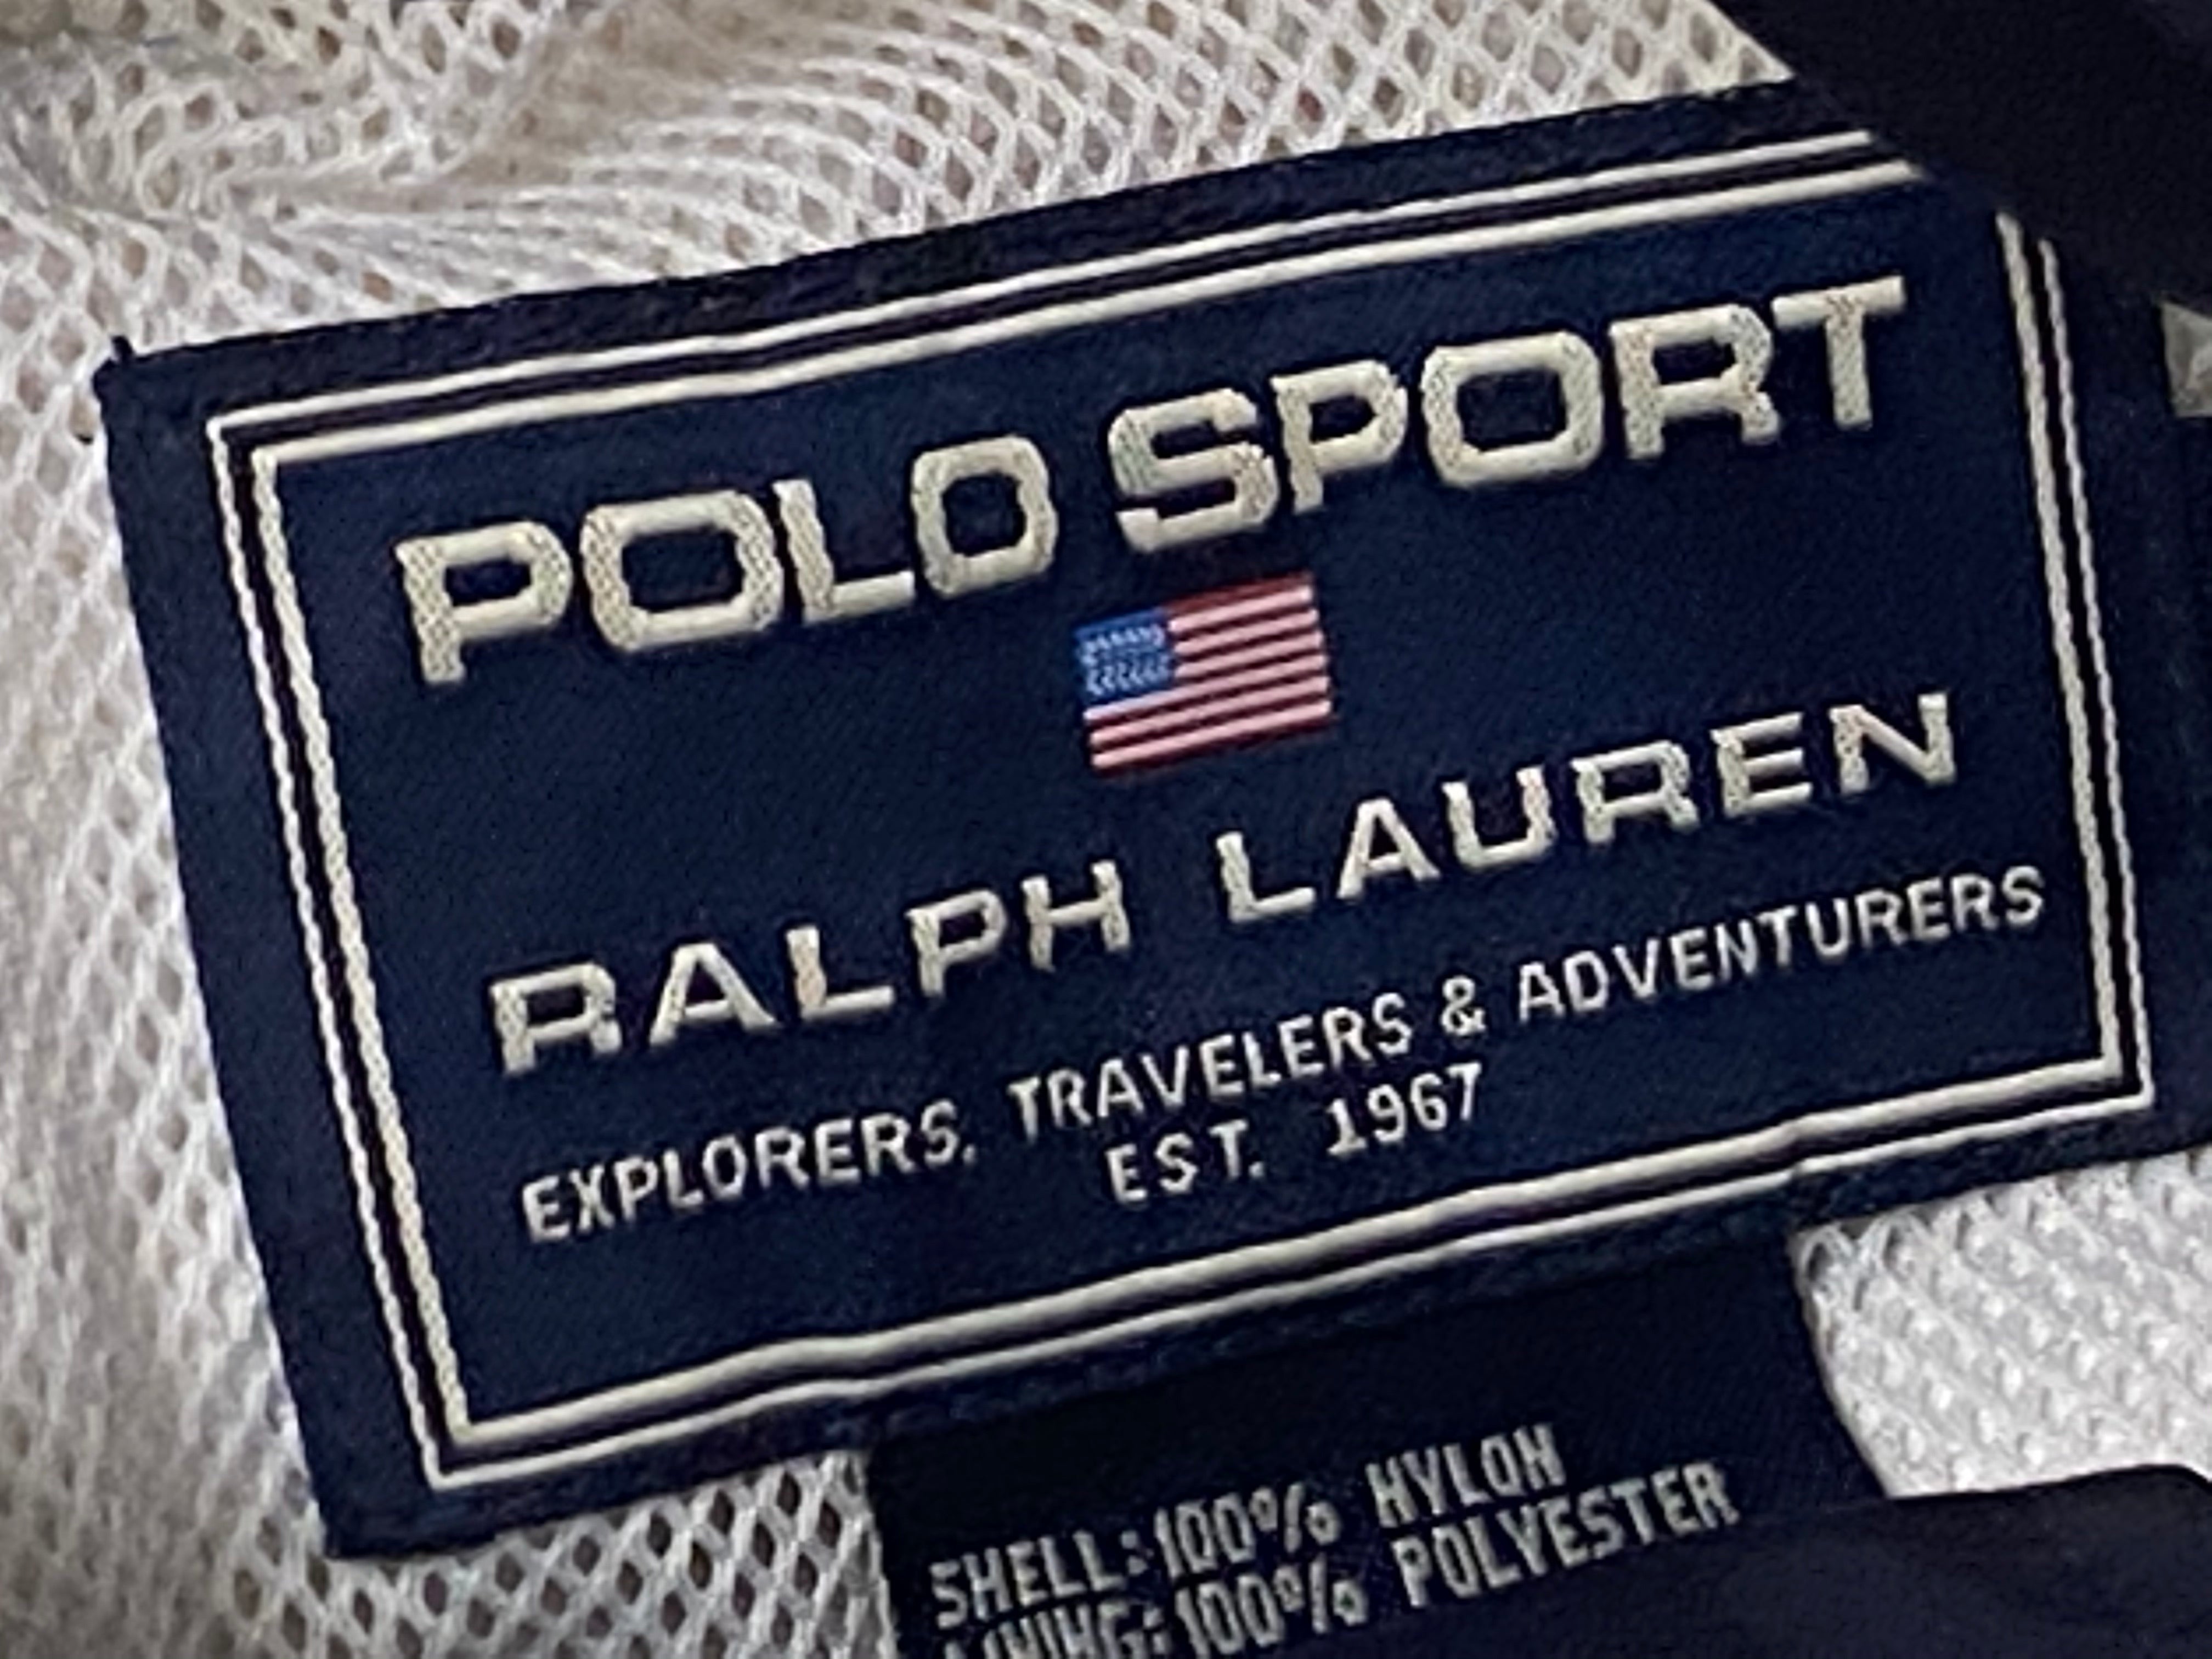 Polo Sport Zip Up Jacket - Cream